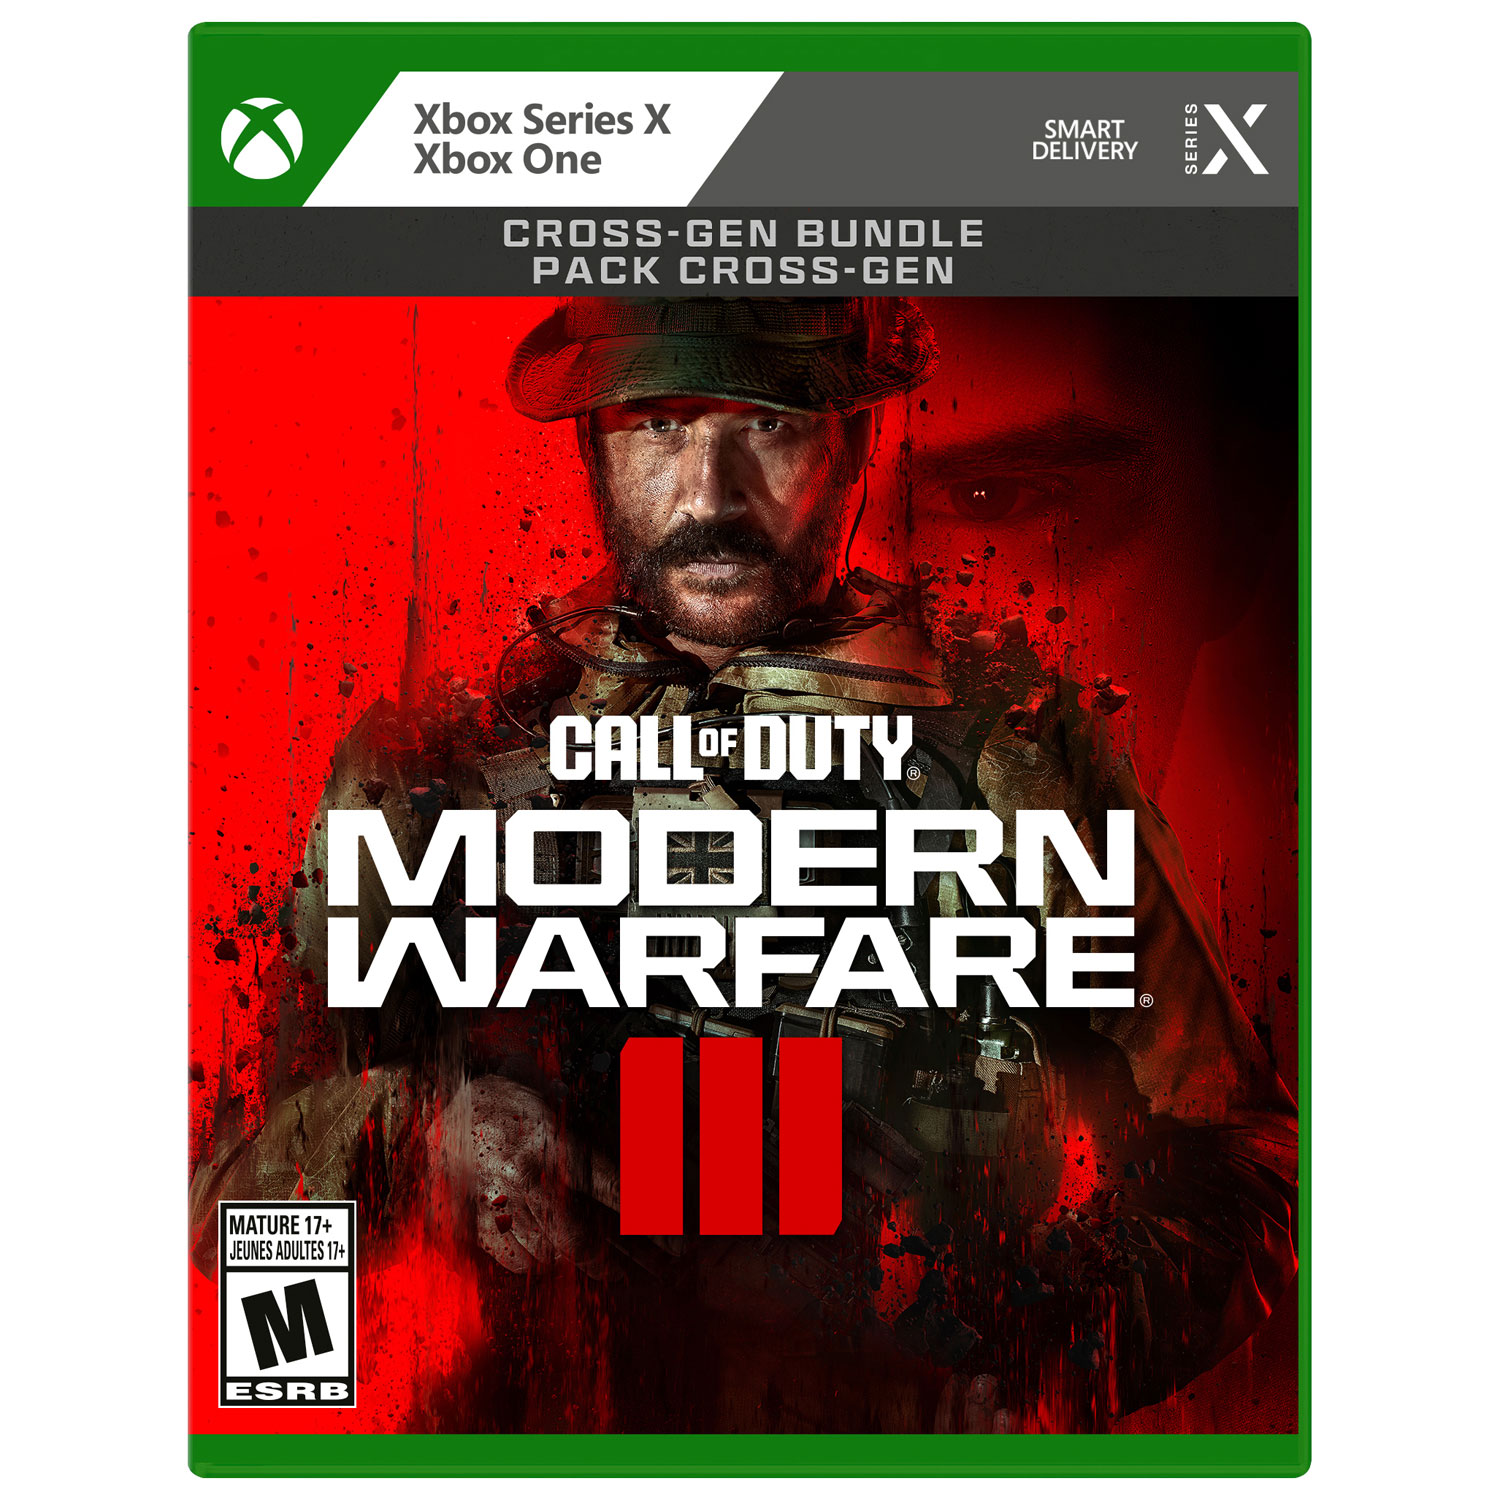 Call of Duty: Modern Warfare III - Cross-Gen Bundle (Xbox Series X / Xbox One)